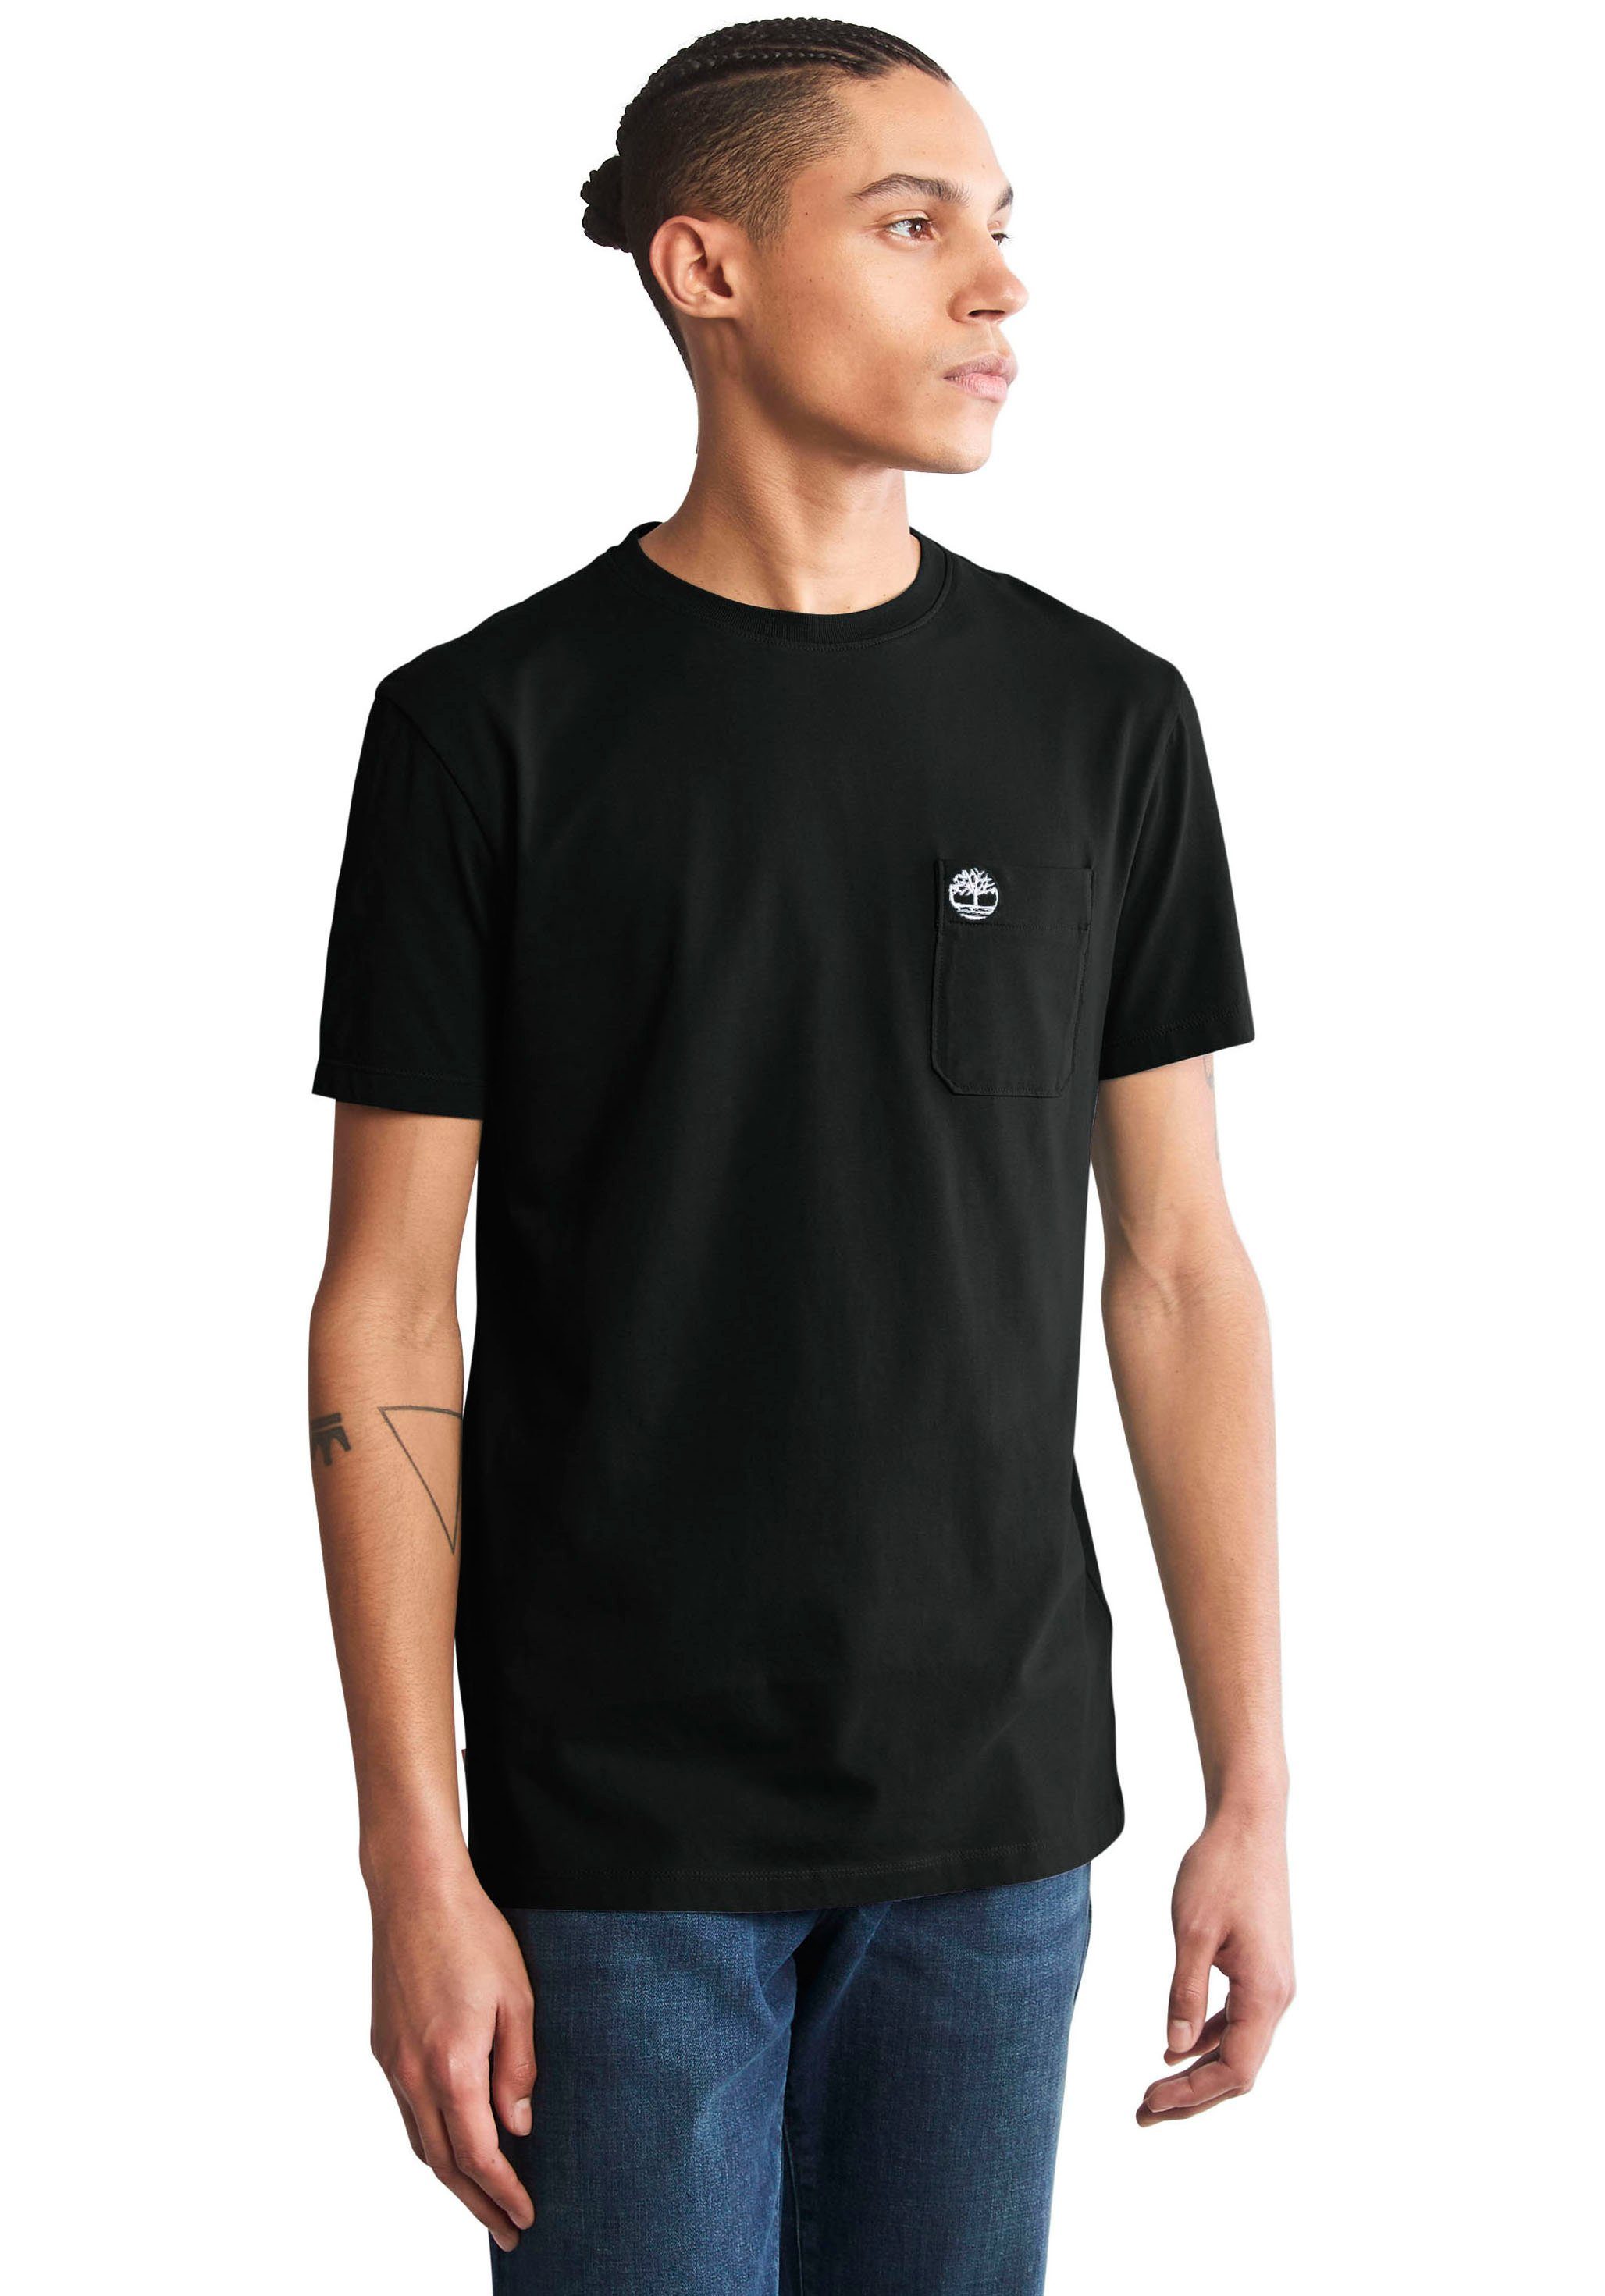 Timberland T-Shirt DUNSTAN RIVER POCKET black TEE